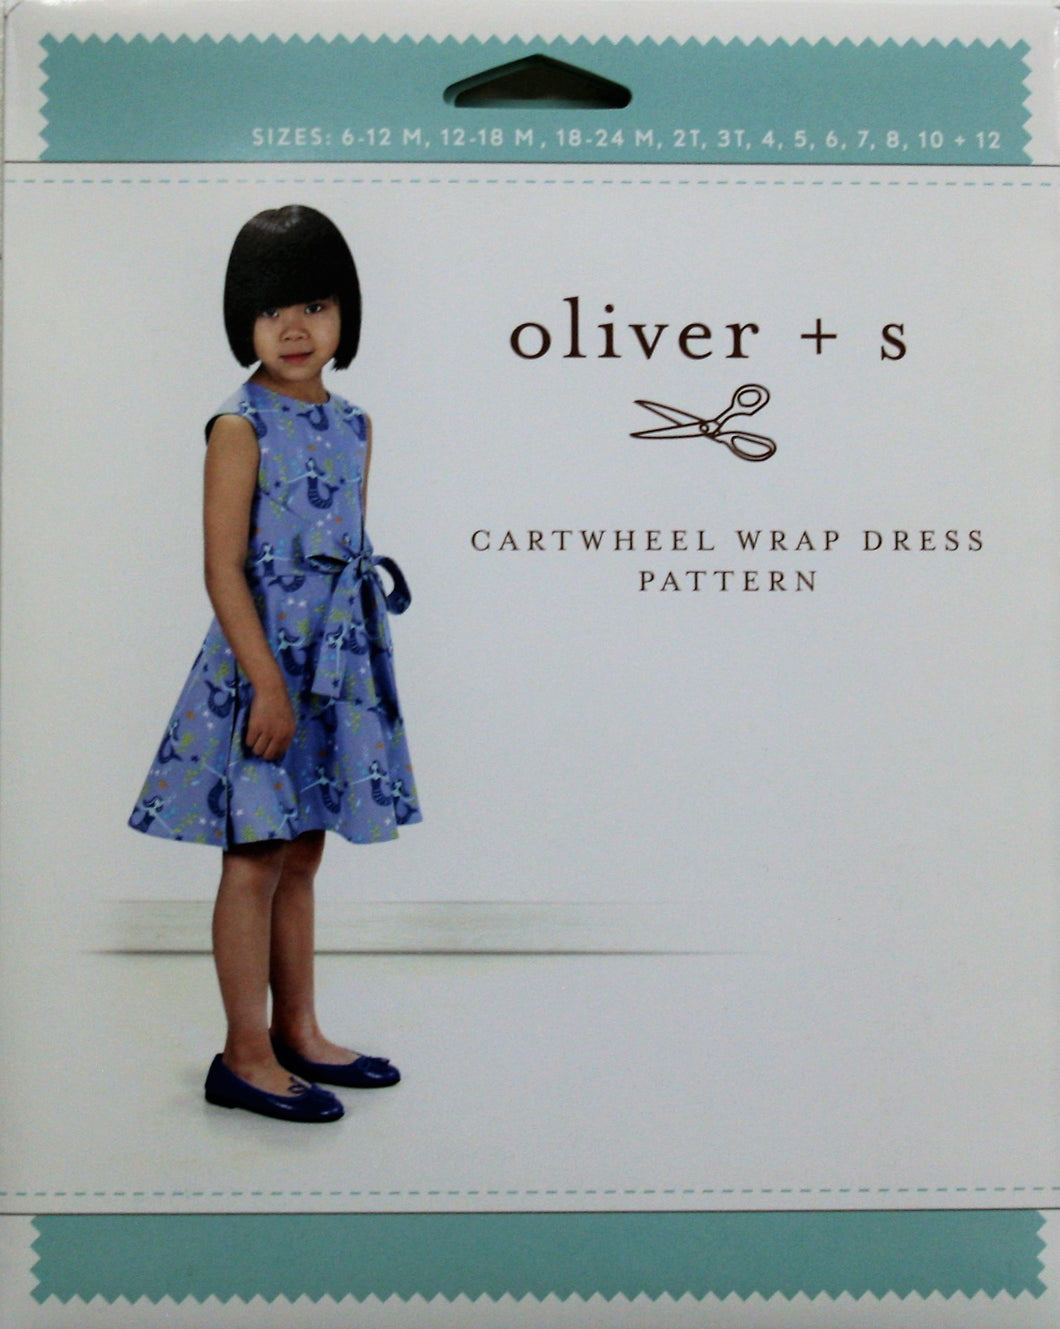 Cartwheel Wrap Dress - oliver + s